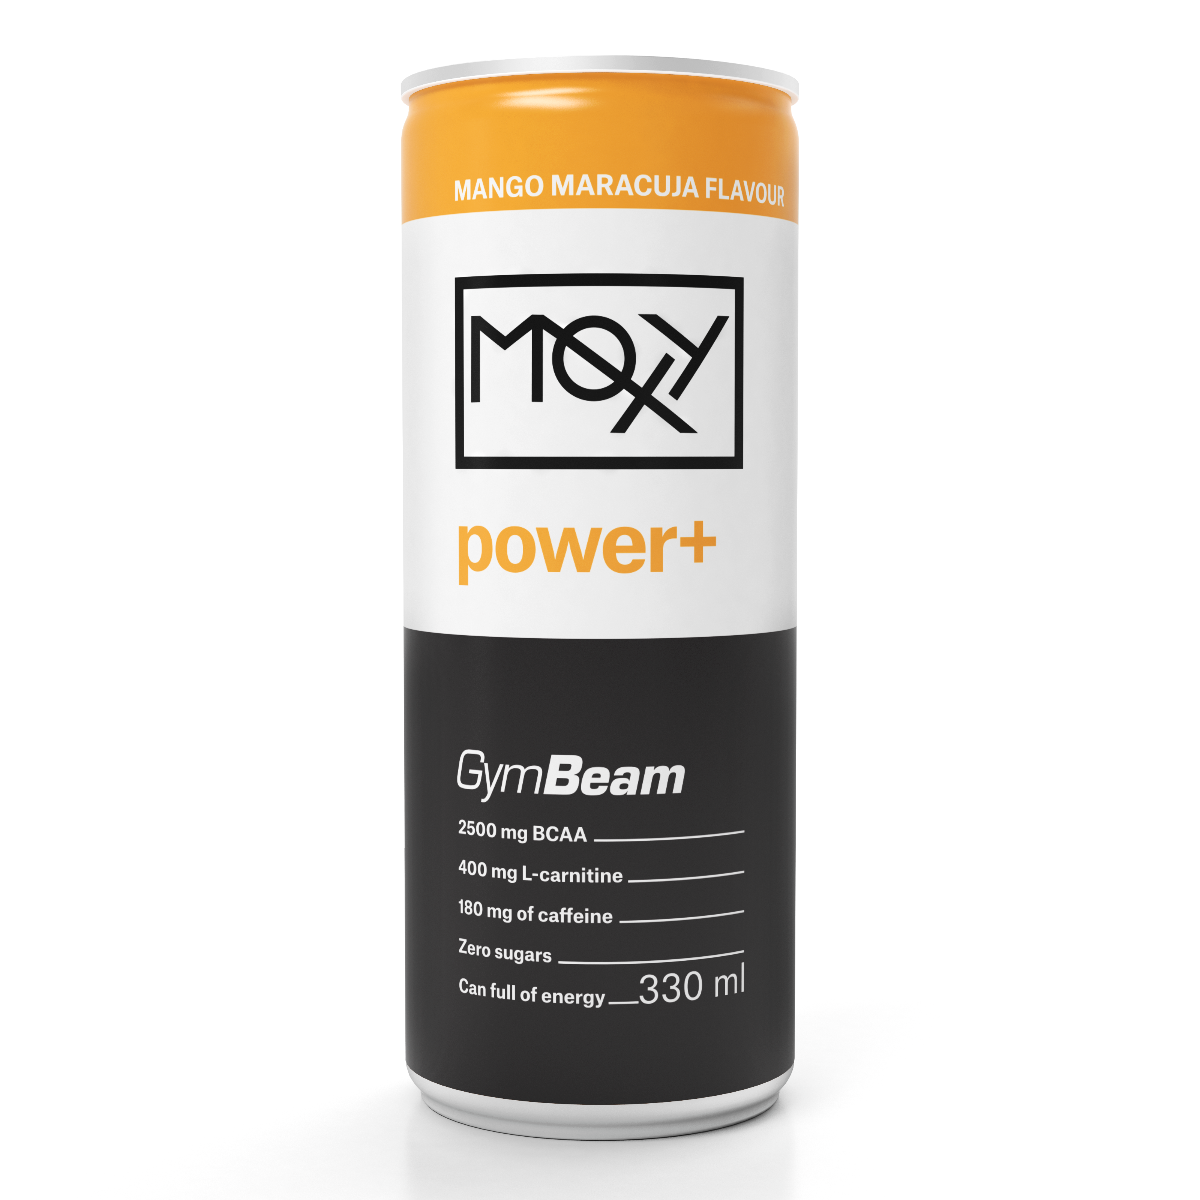 GymBeam Moxy Power+ Energy Drink 330 ml mango marakuja